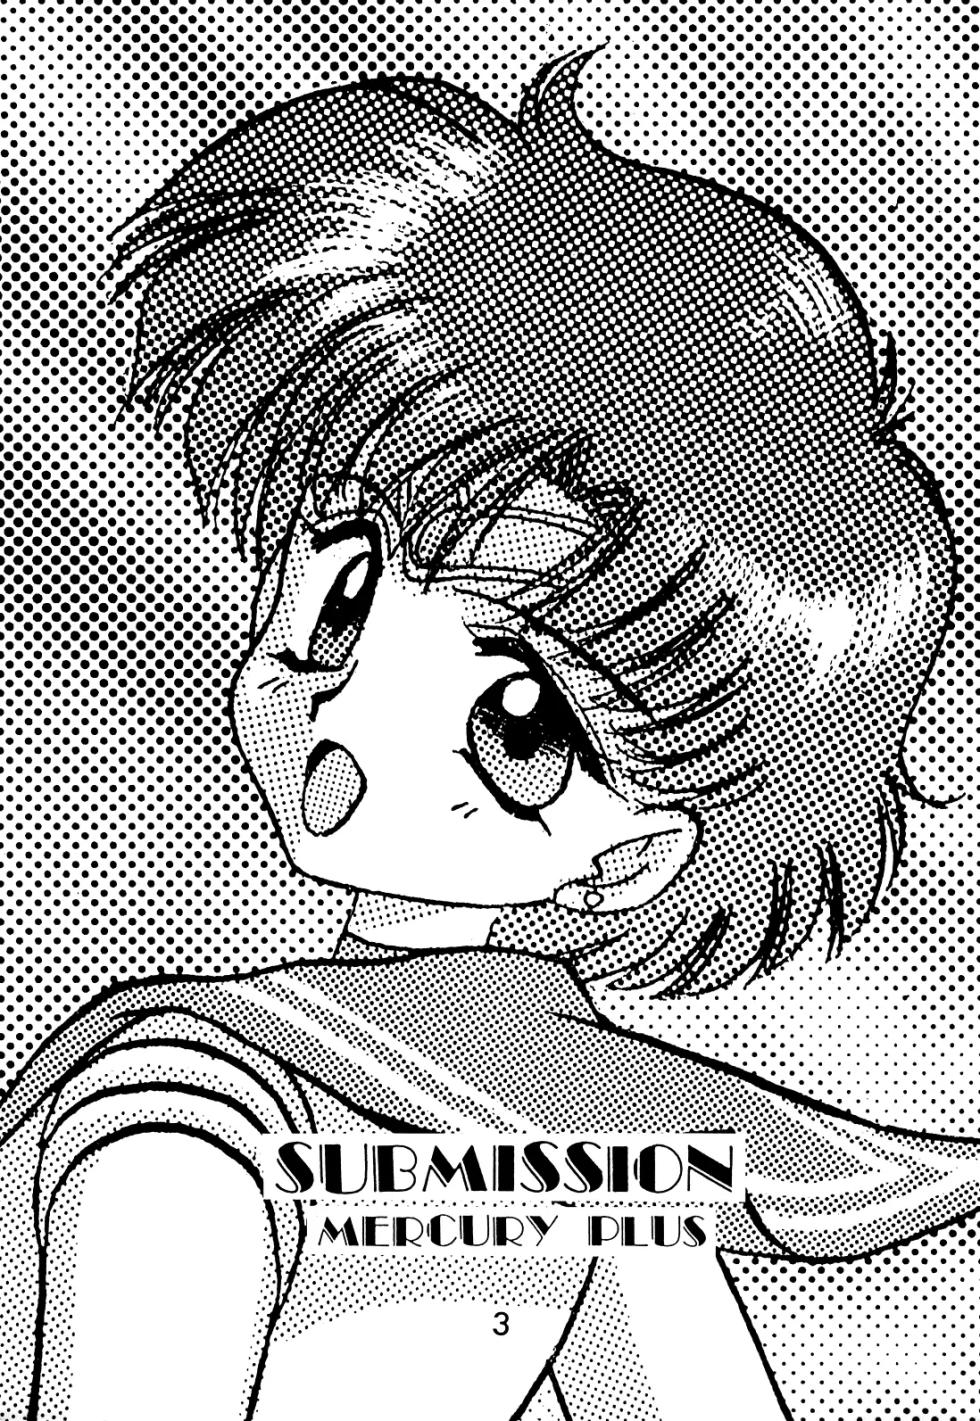 Sailor Moon - Submission Mercury Plus - Kuroinu Juu (Black Dog) - PORTUGUÊS BR - Page 2